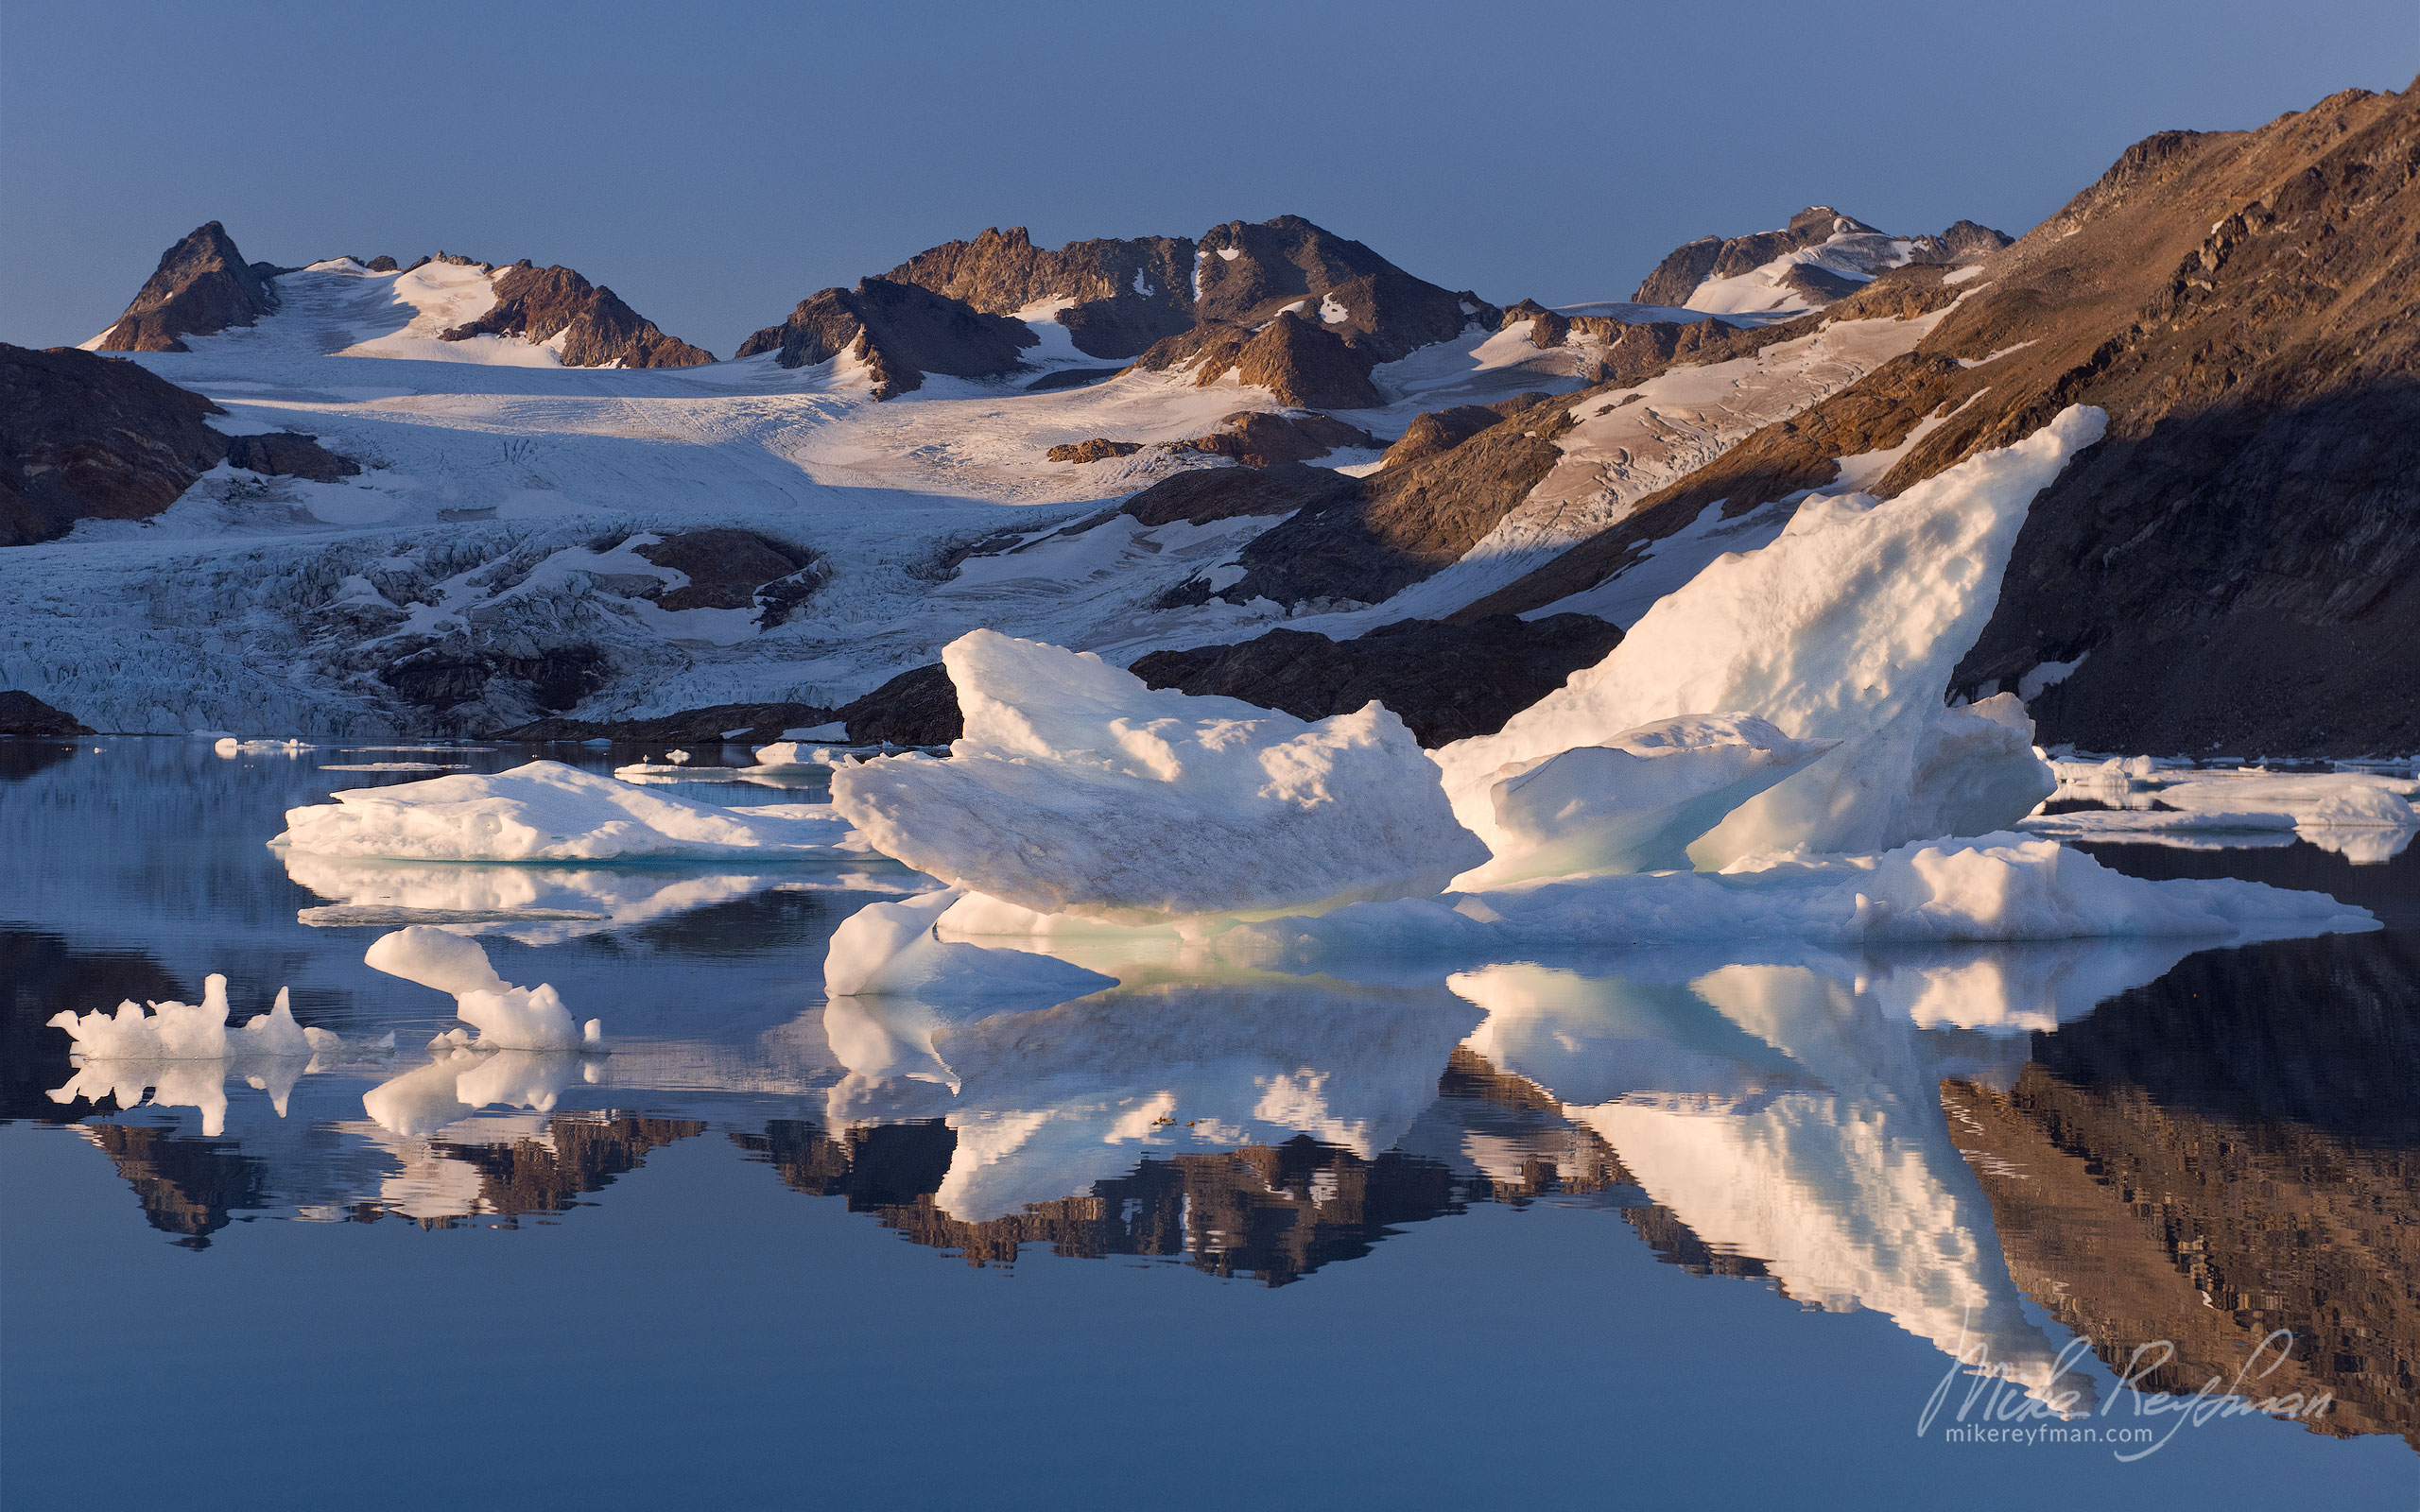 Tidewater Apusiaajik Glacier. Torsuut Tunoq Sound, Southeastern Greenland. 016-GR-KU_P3X4475 - Kulusuk island, Ammassalik Fjord & Torsuut Tunoq Sound. Southeastern Greenland - Mike Reyfman Photography